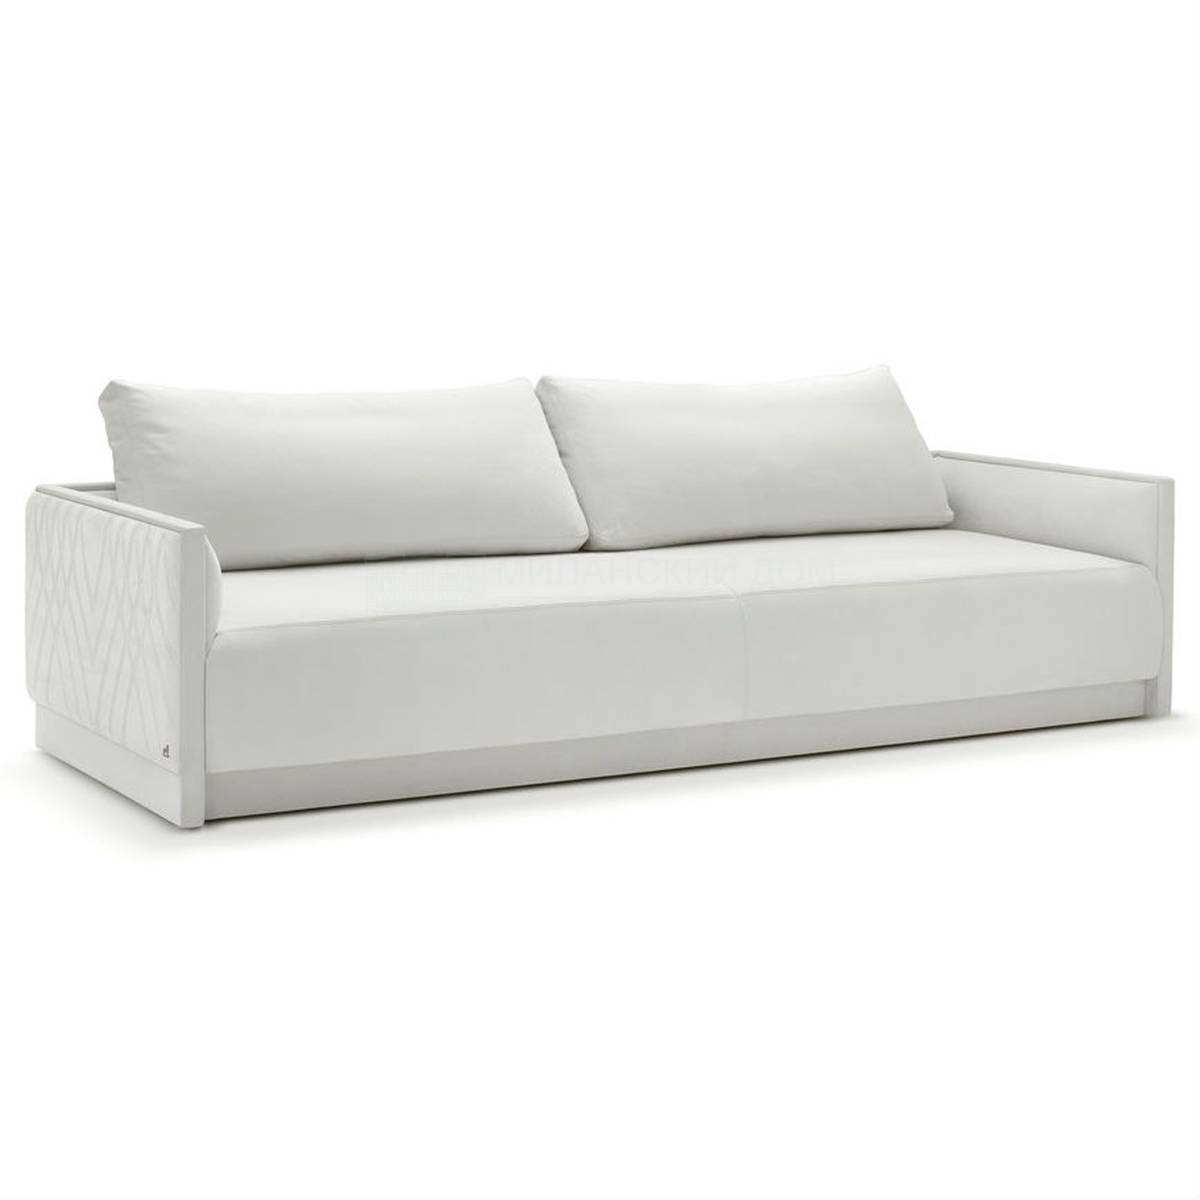 Прямой диван Miami sofa by smania из Великобритании фабрики THE SOFA & CHAIR Company